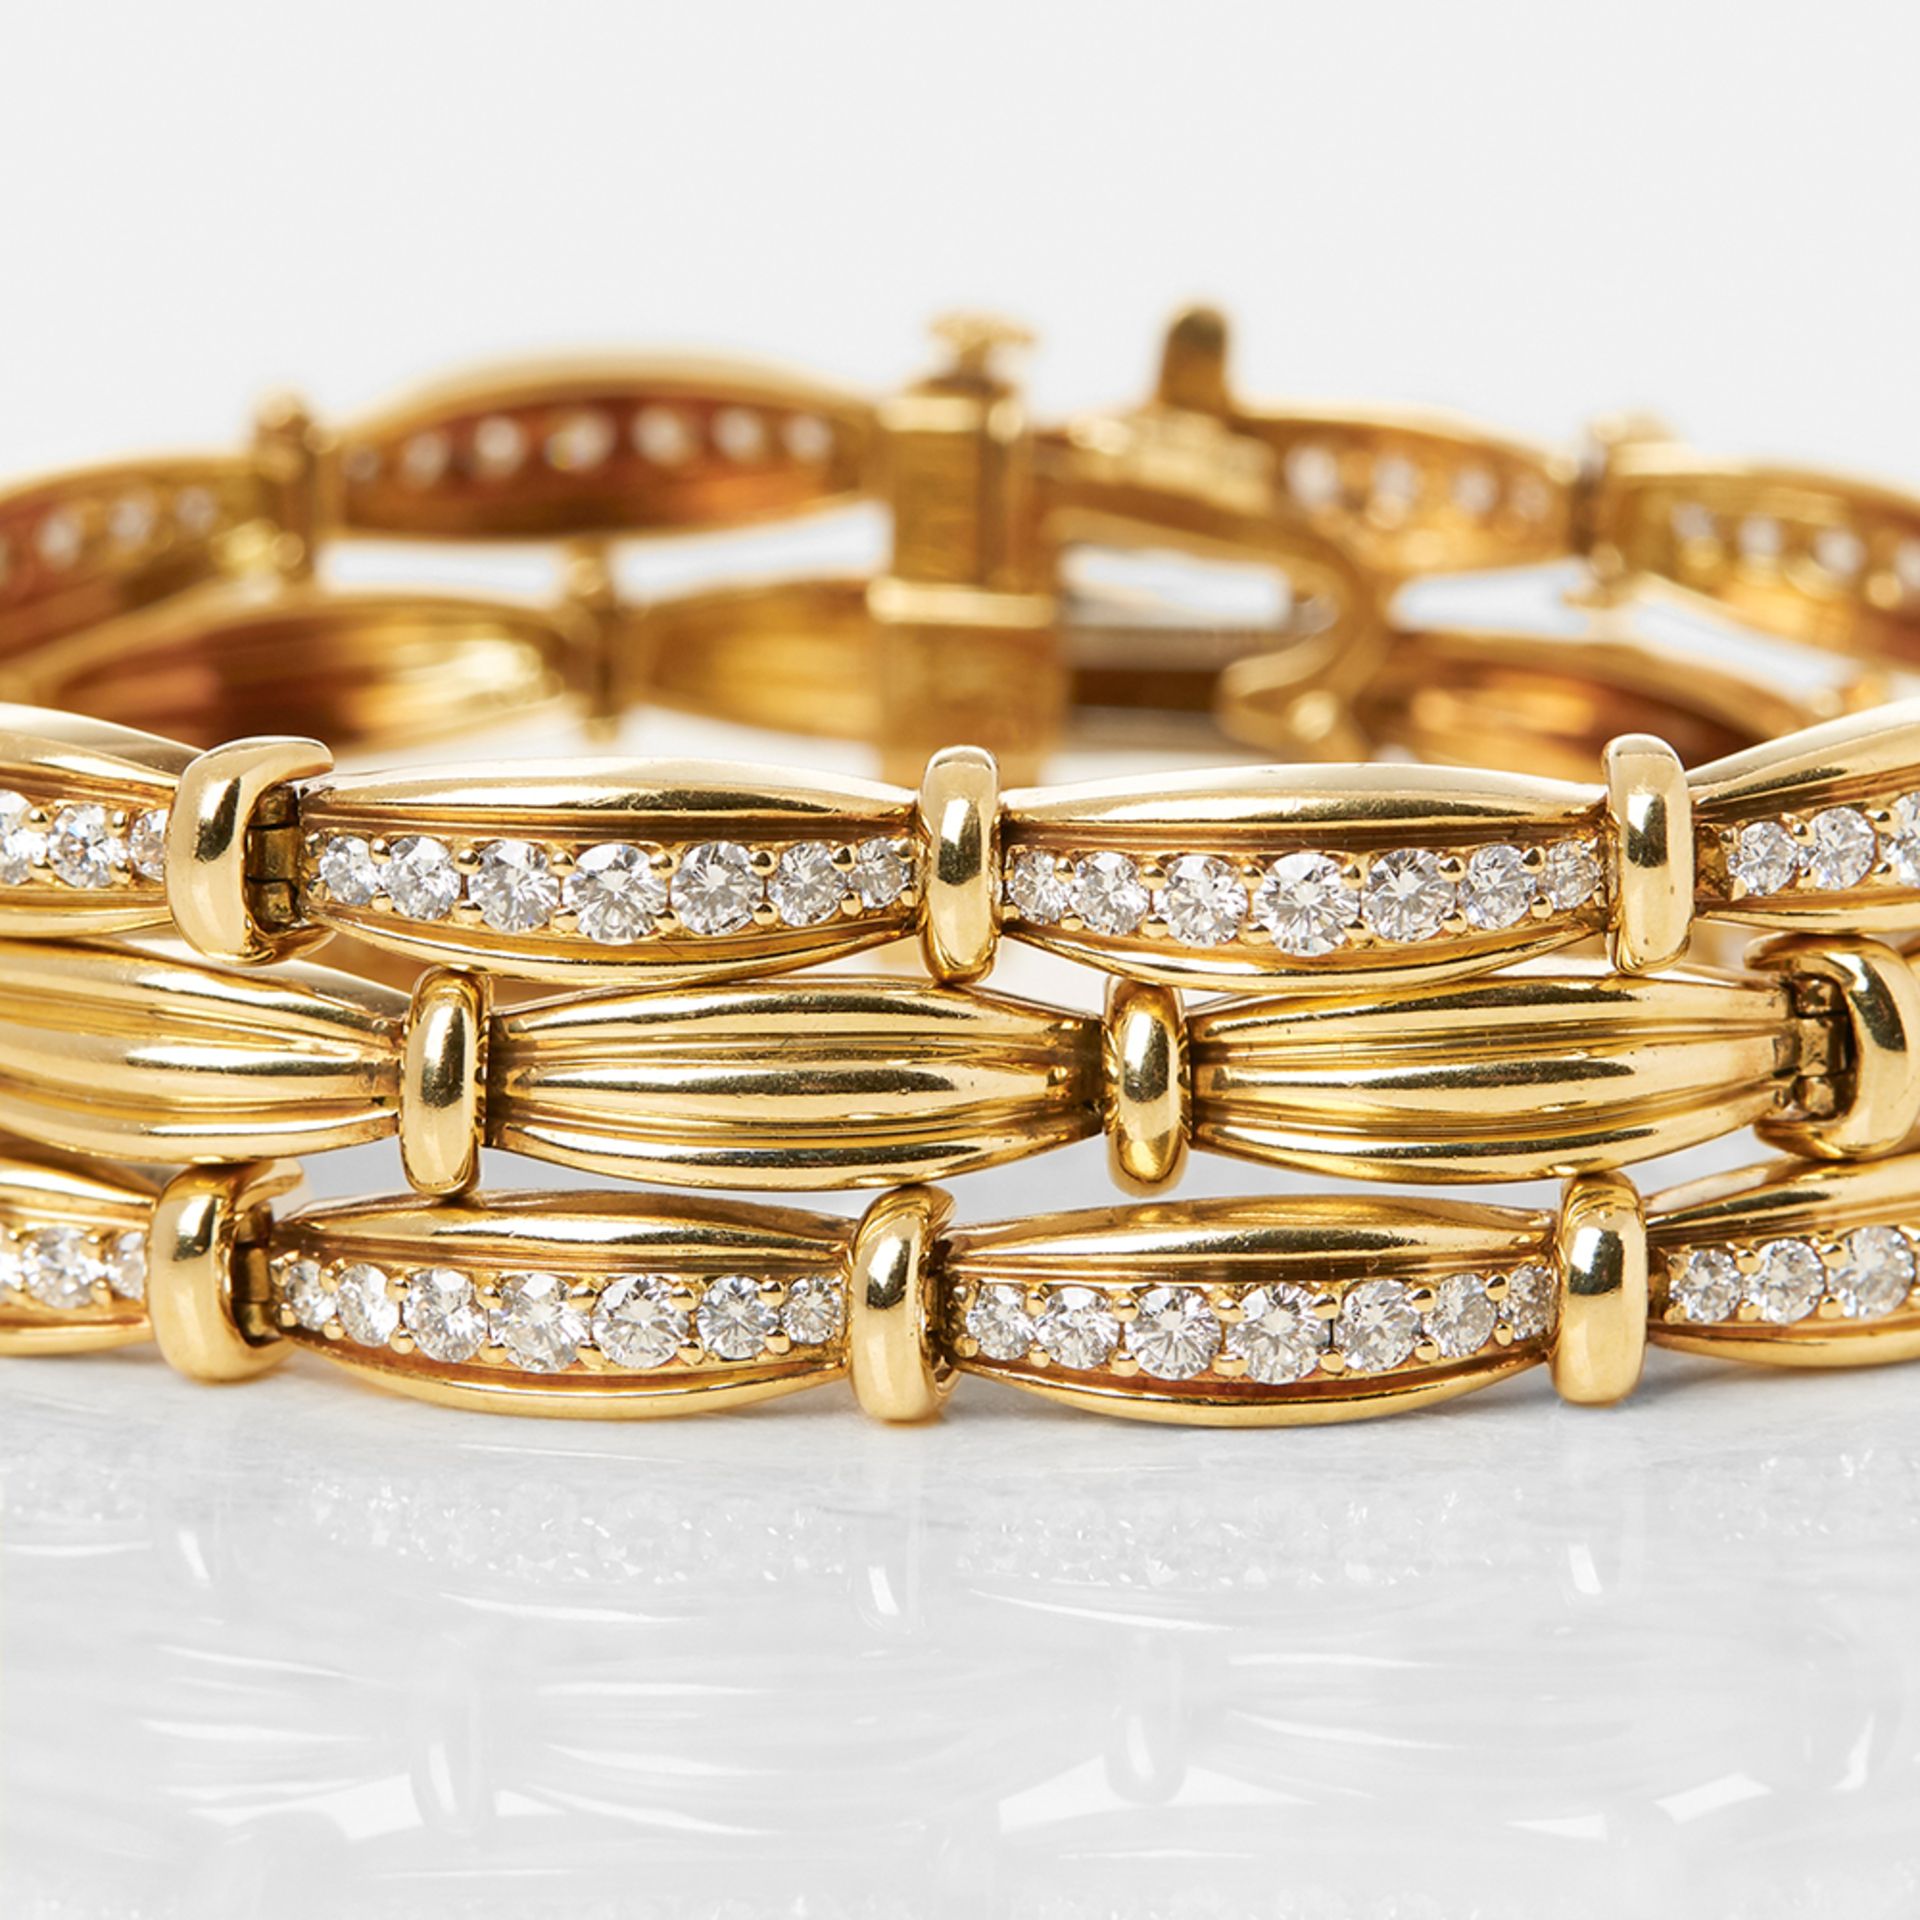 Tiffany & Co. 18k Yellow Gold Diamond Three Strand Vintage Bracelet with Presentation Box - Image 6 of 17